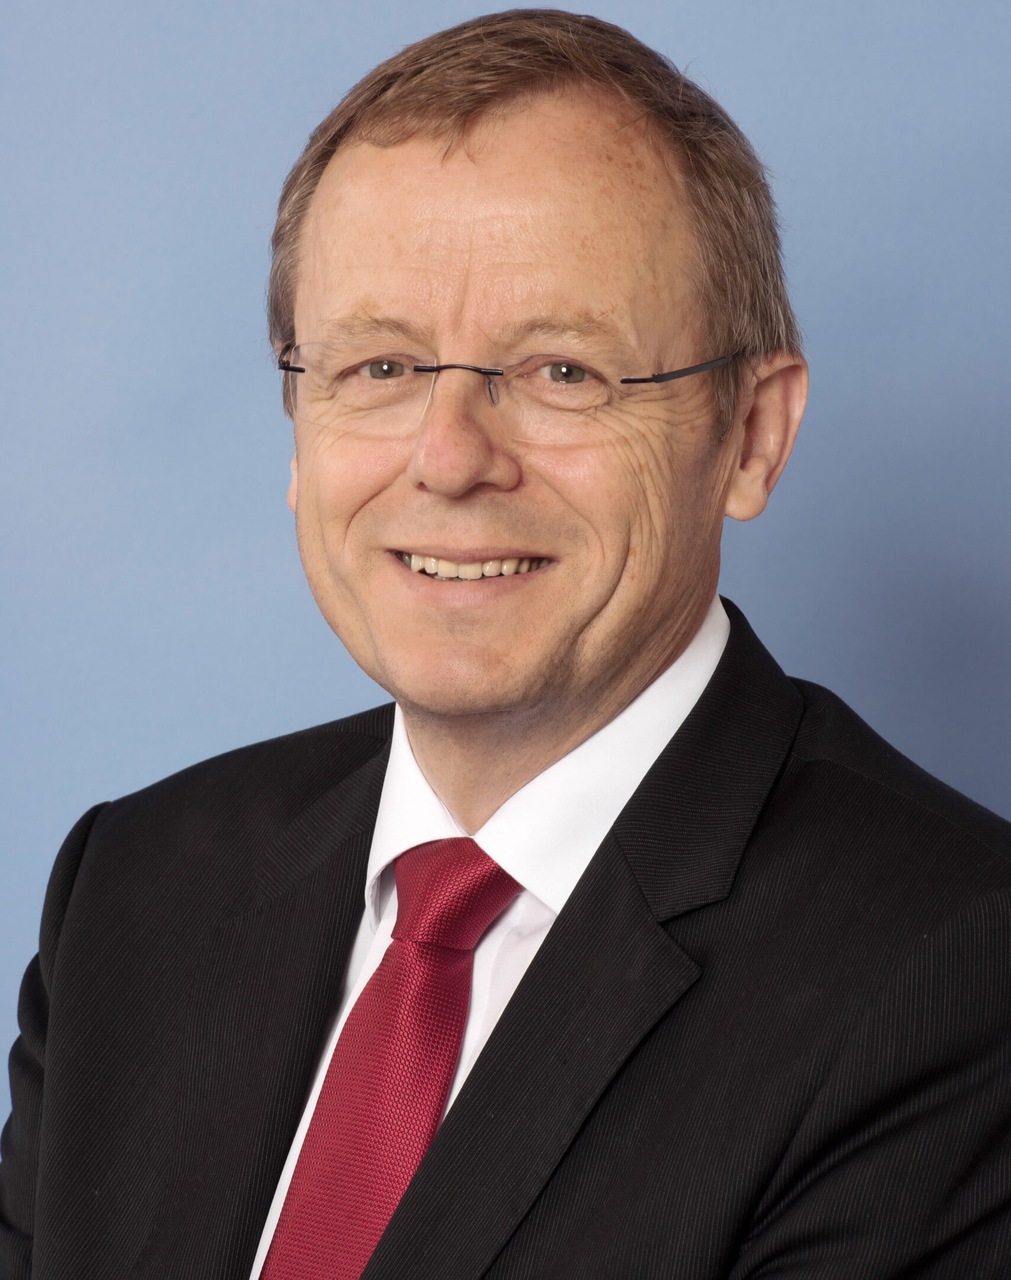 NIDT: Jan Wörner è Presidente dell’Accademia Tedesca di Scienza e Ingegneria acatech